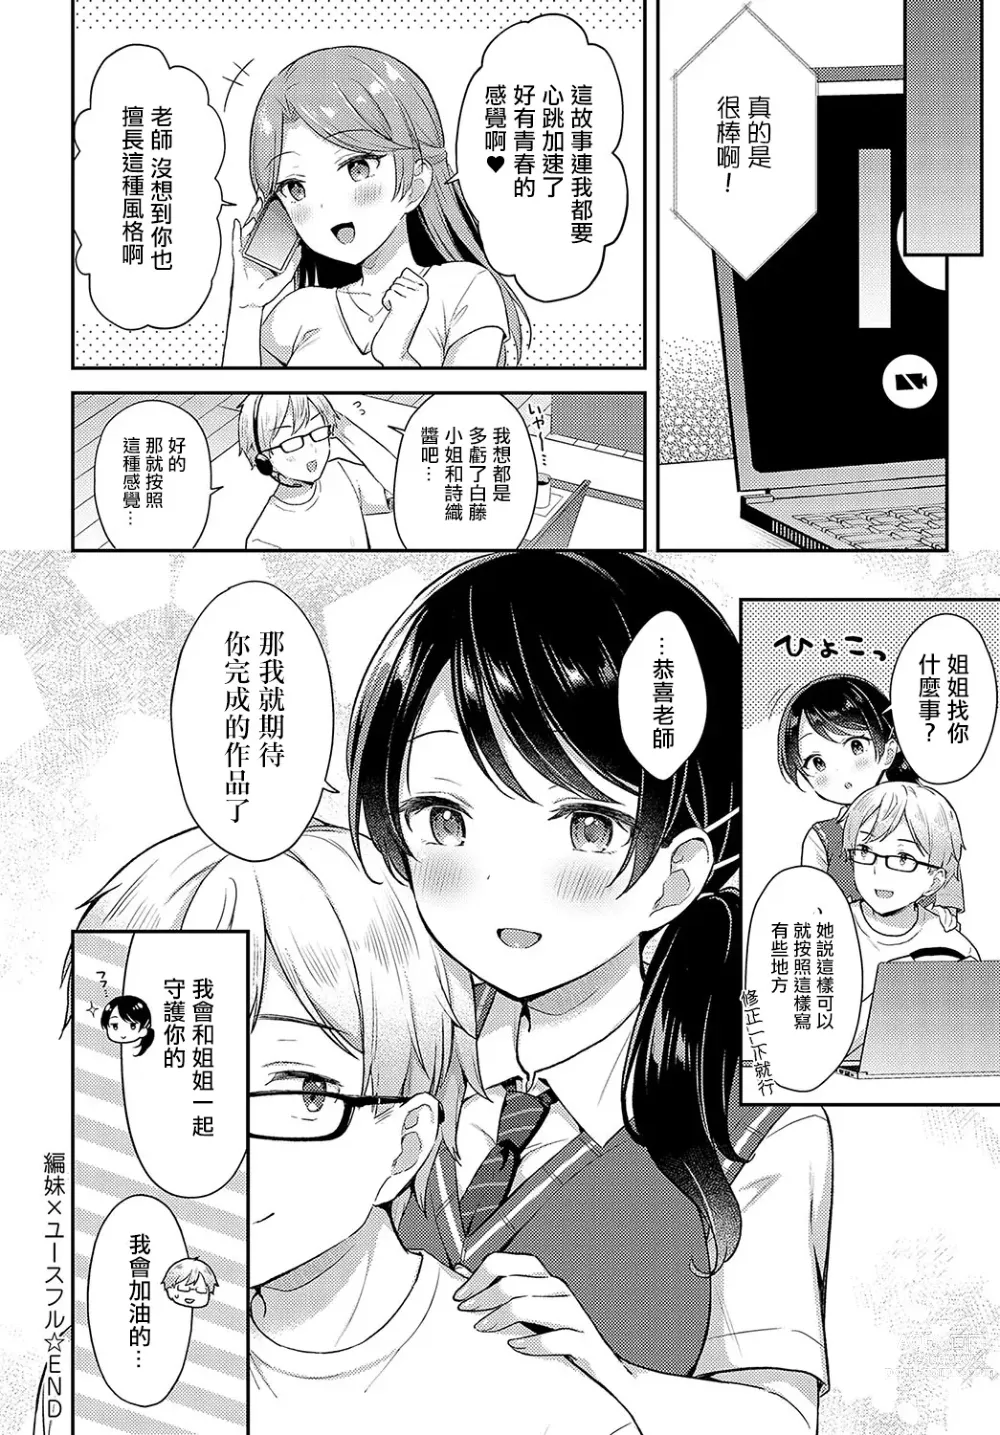 Page 25 of manga Han-imo x Youthful